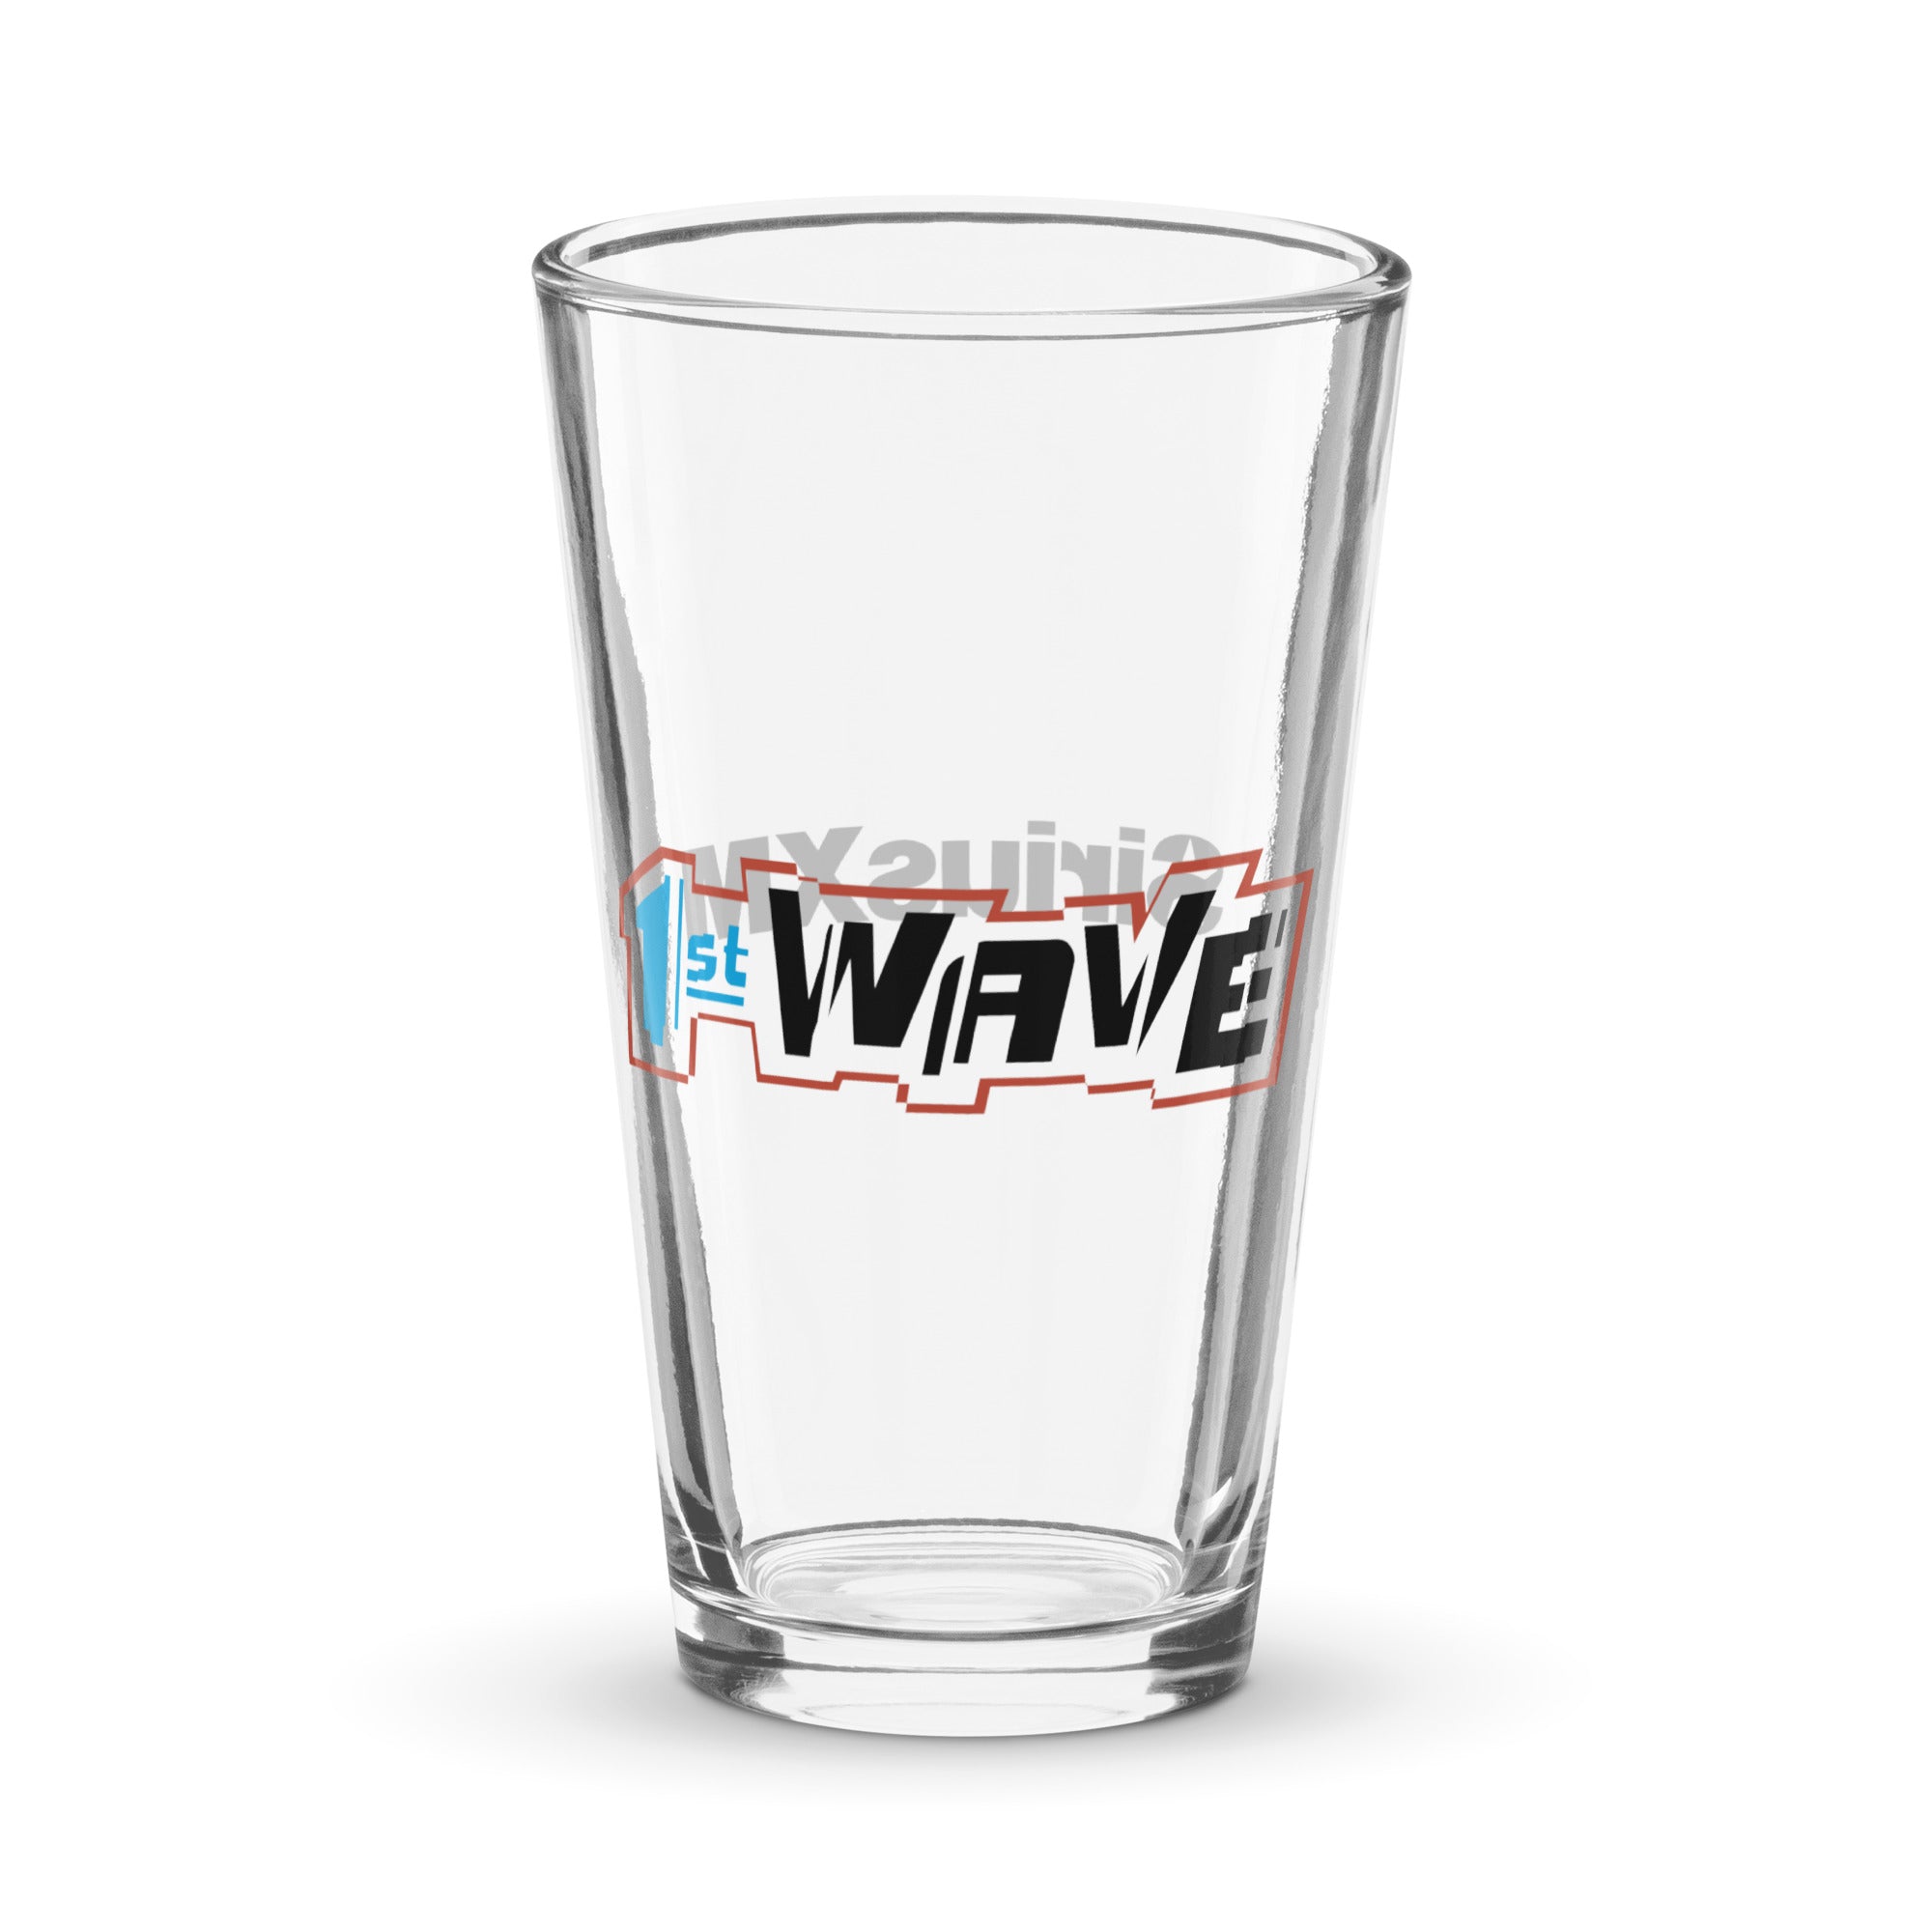 1st Wave: Pint Glass